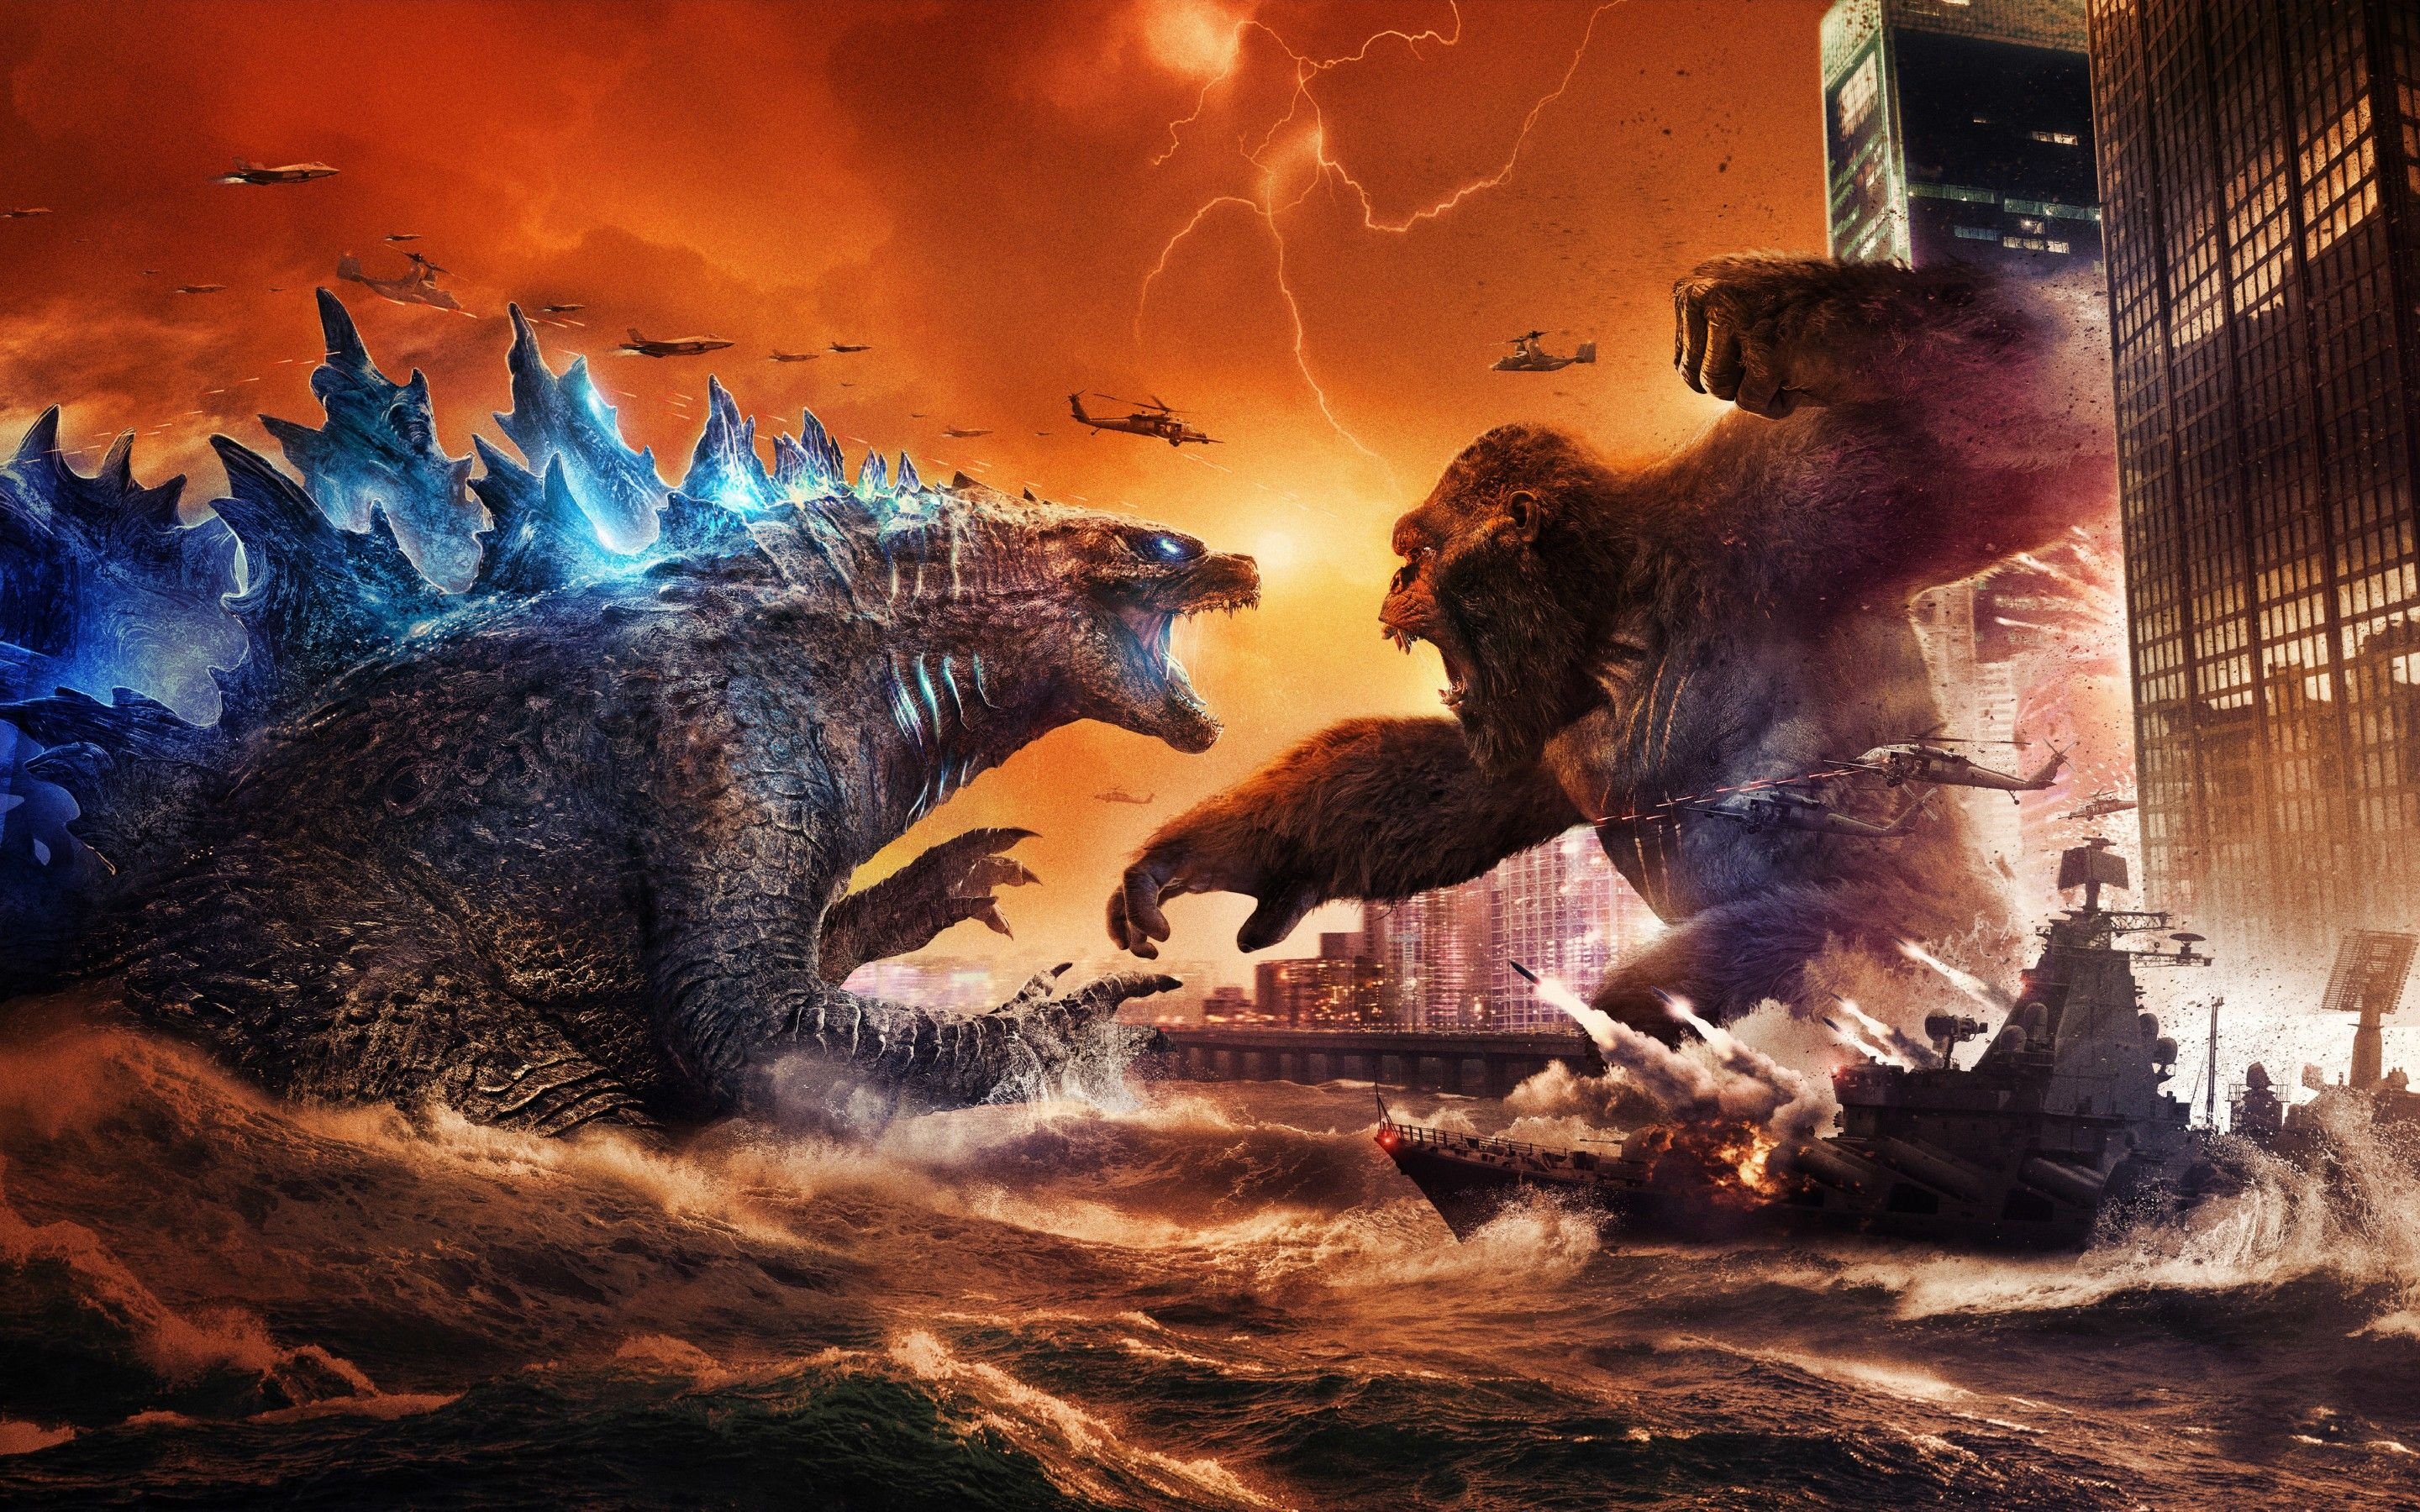 Godzilla vs Kong 4K Wallpaper, 2021 Movies, 5K, Movies